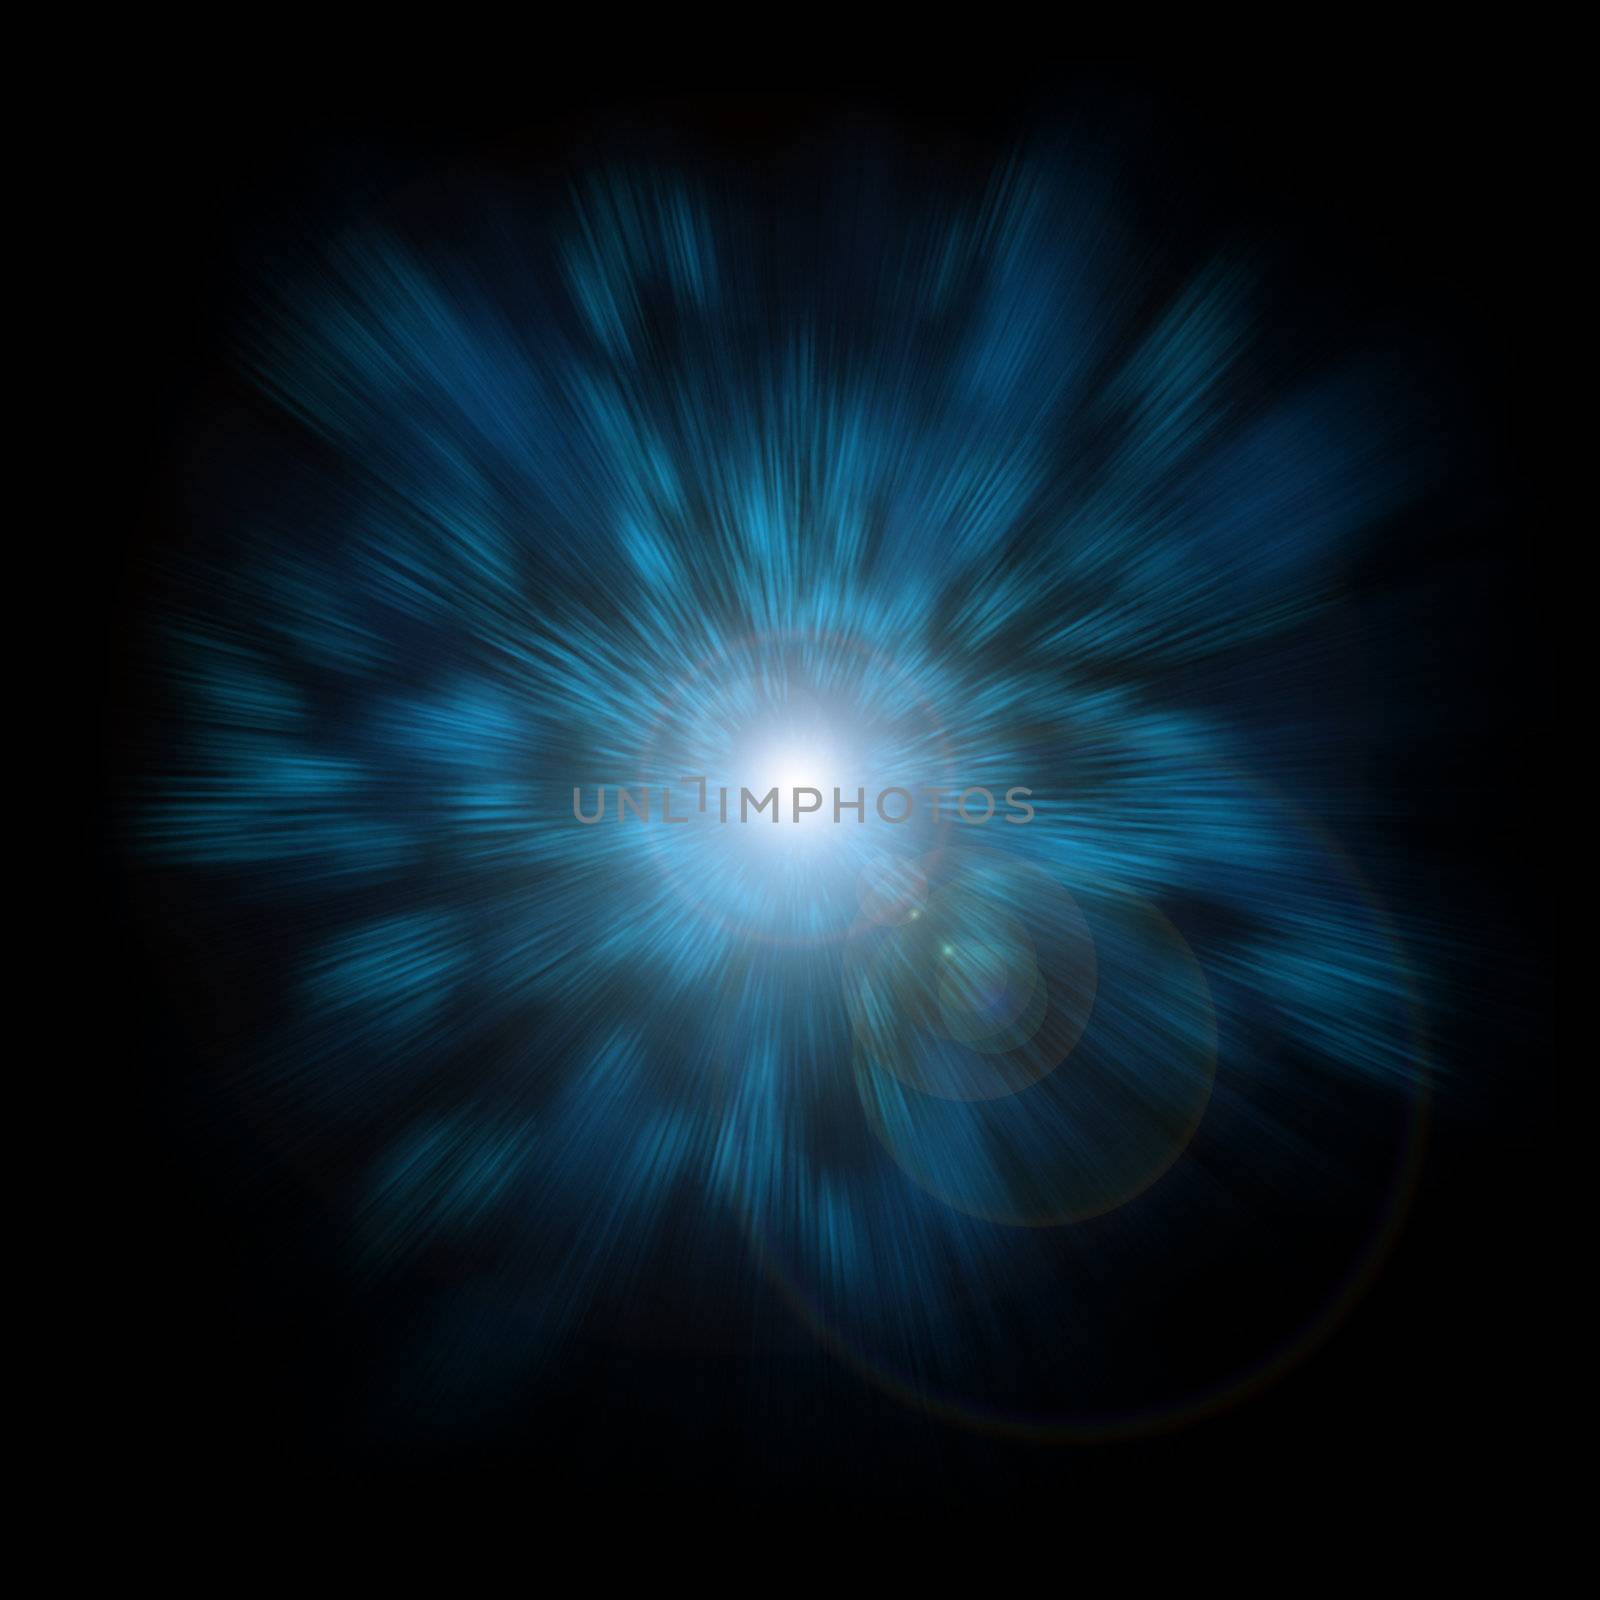 Blue exploding light against a black background